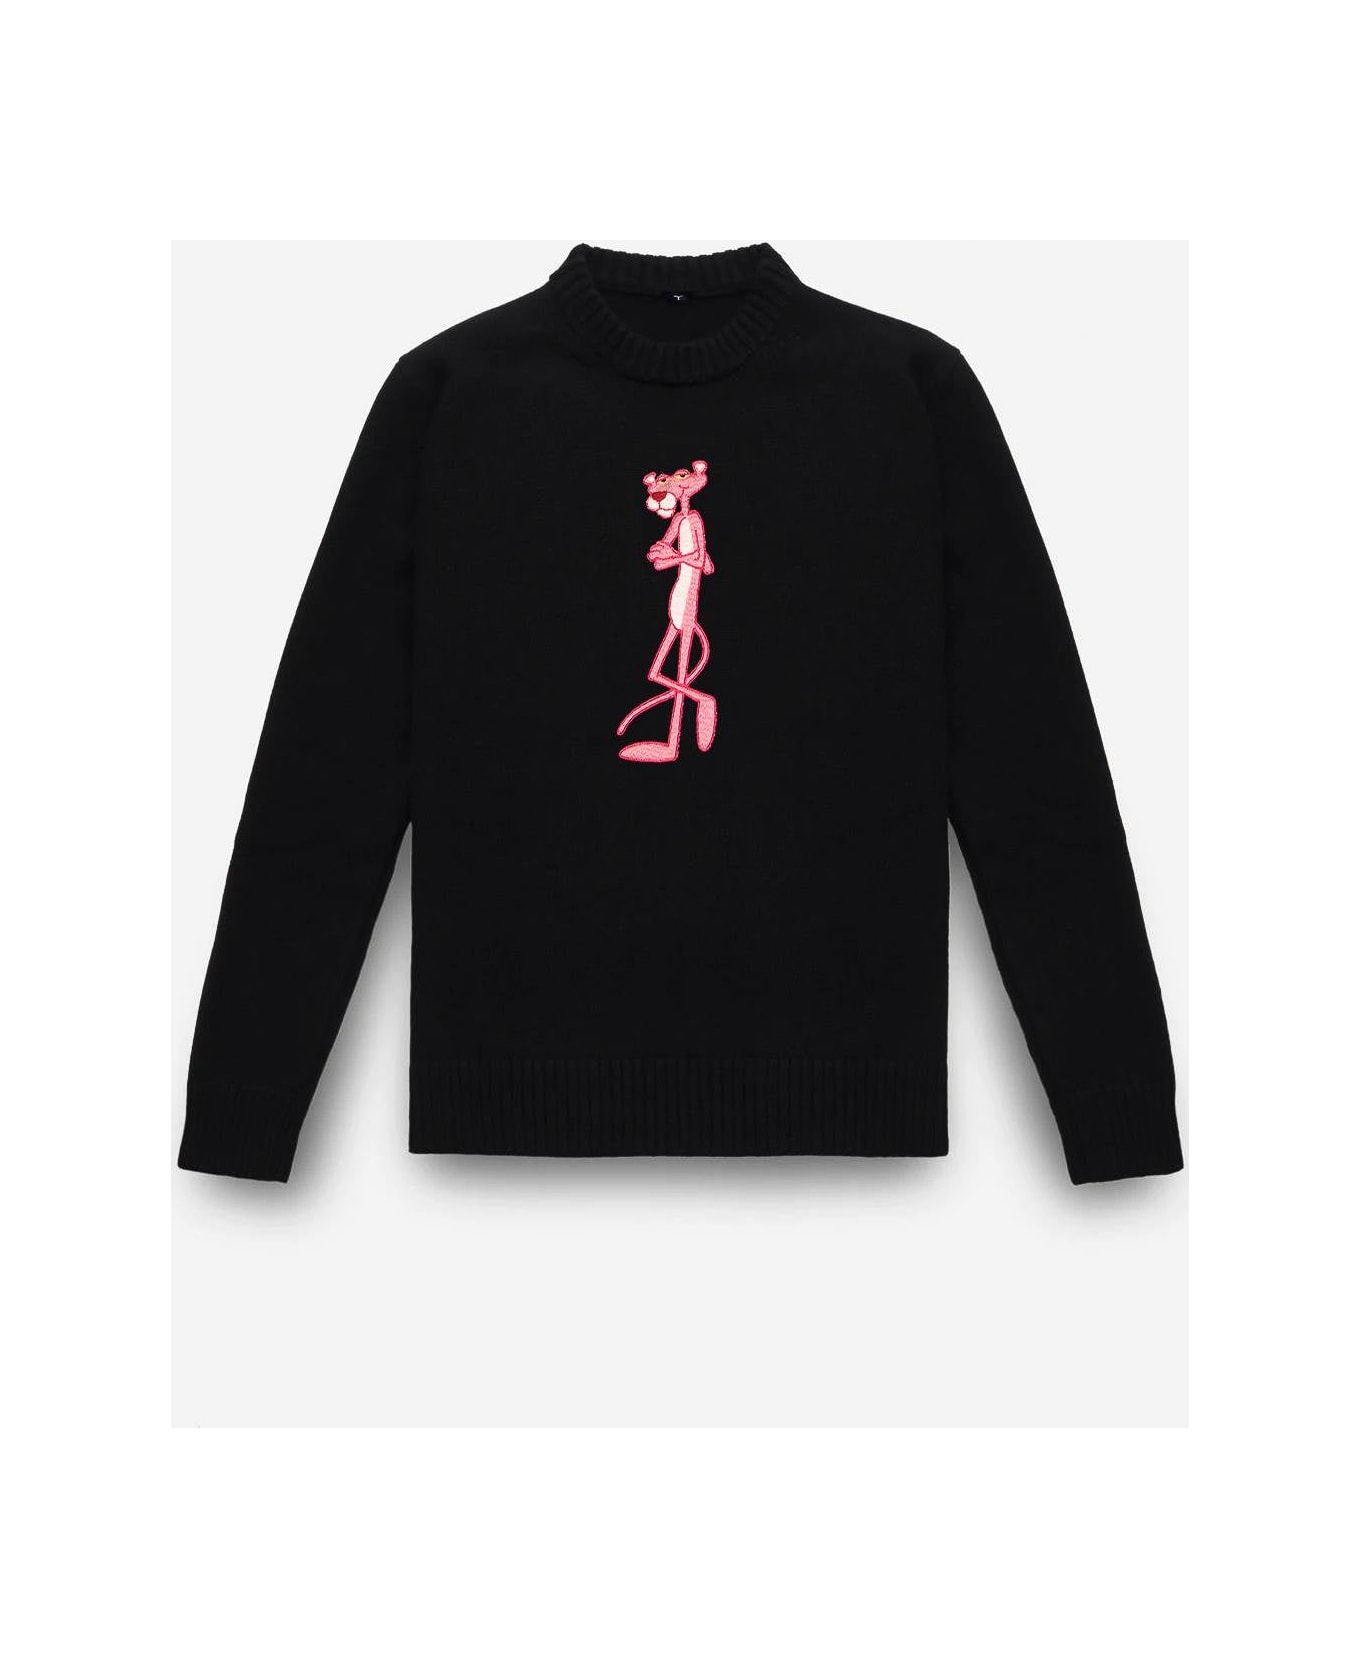 Larusmiani Sweater 'pink Panther' Sweater - Black